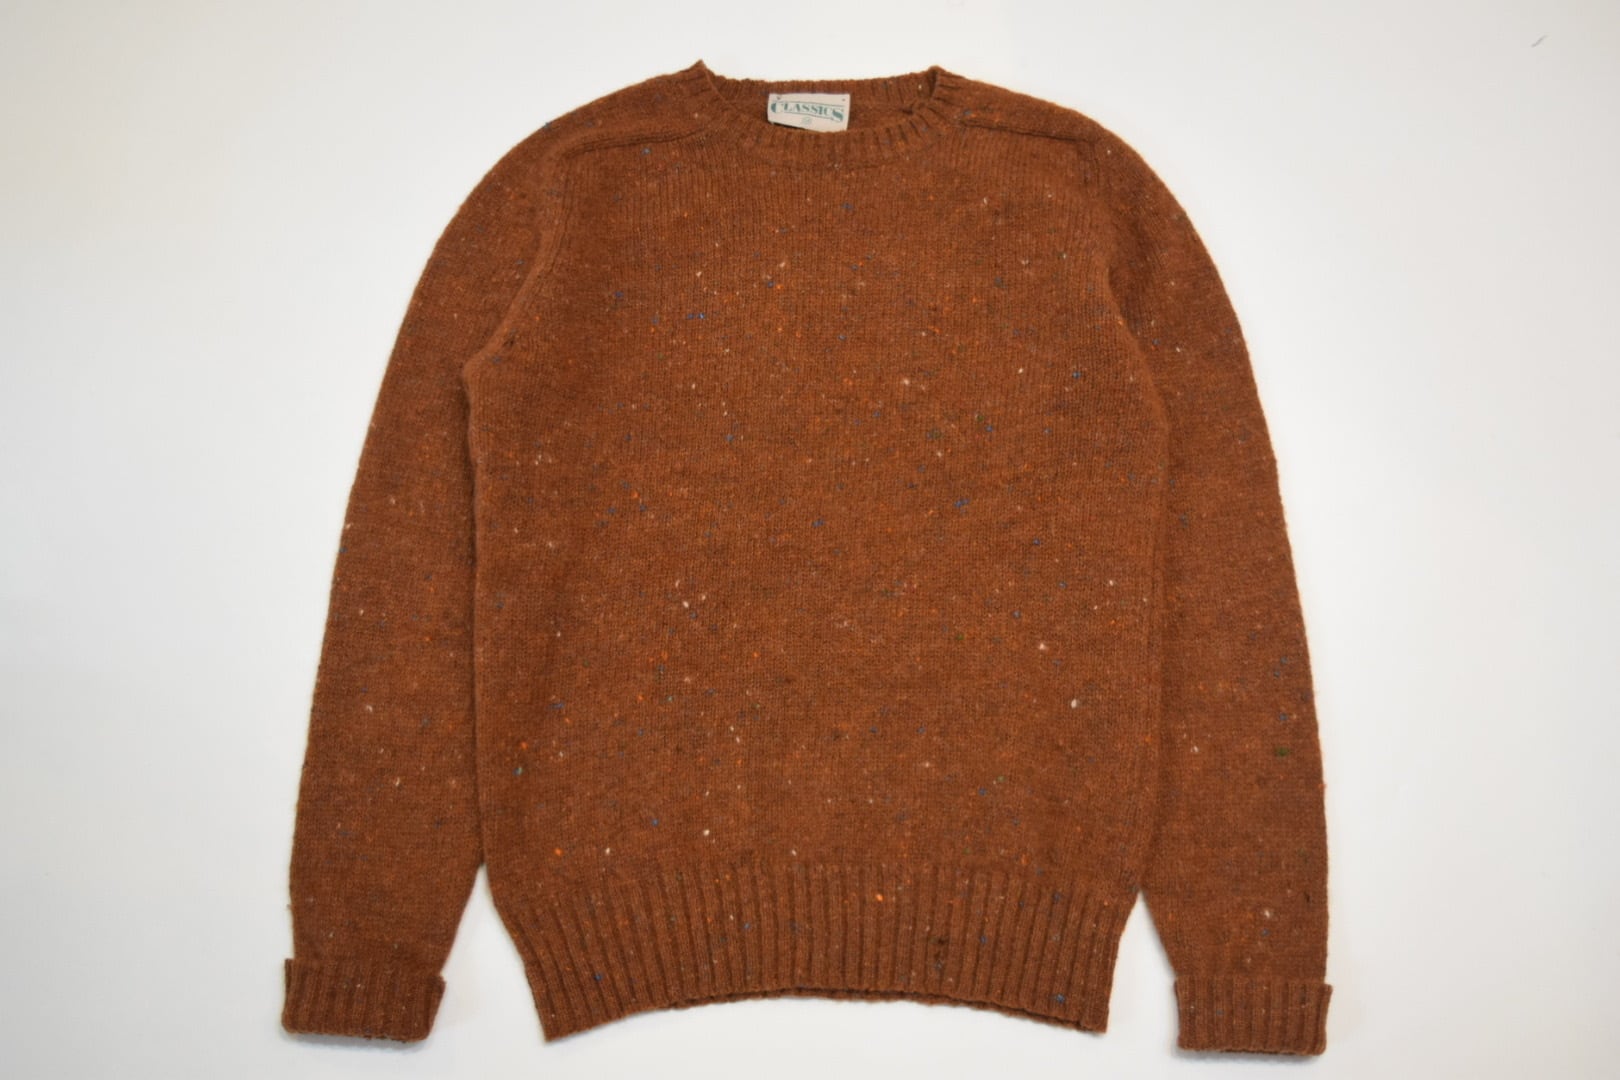 USED 70s "CLASSICS" Wool Sweater -Medium 01249